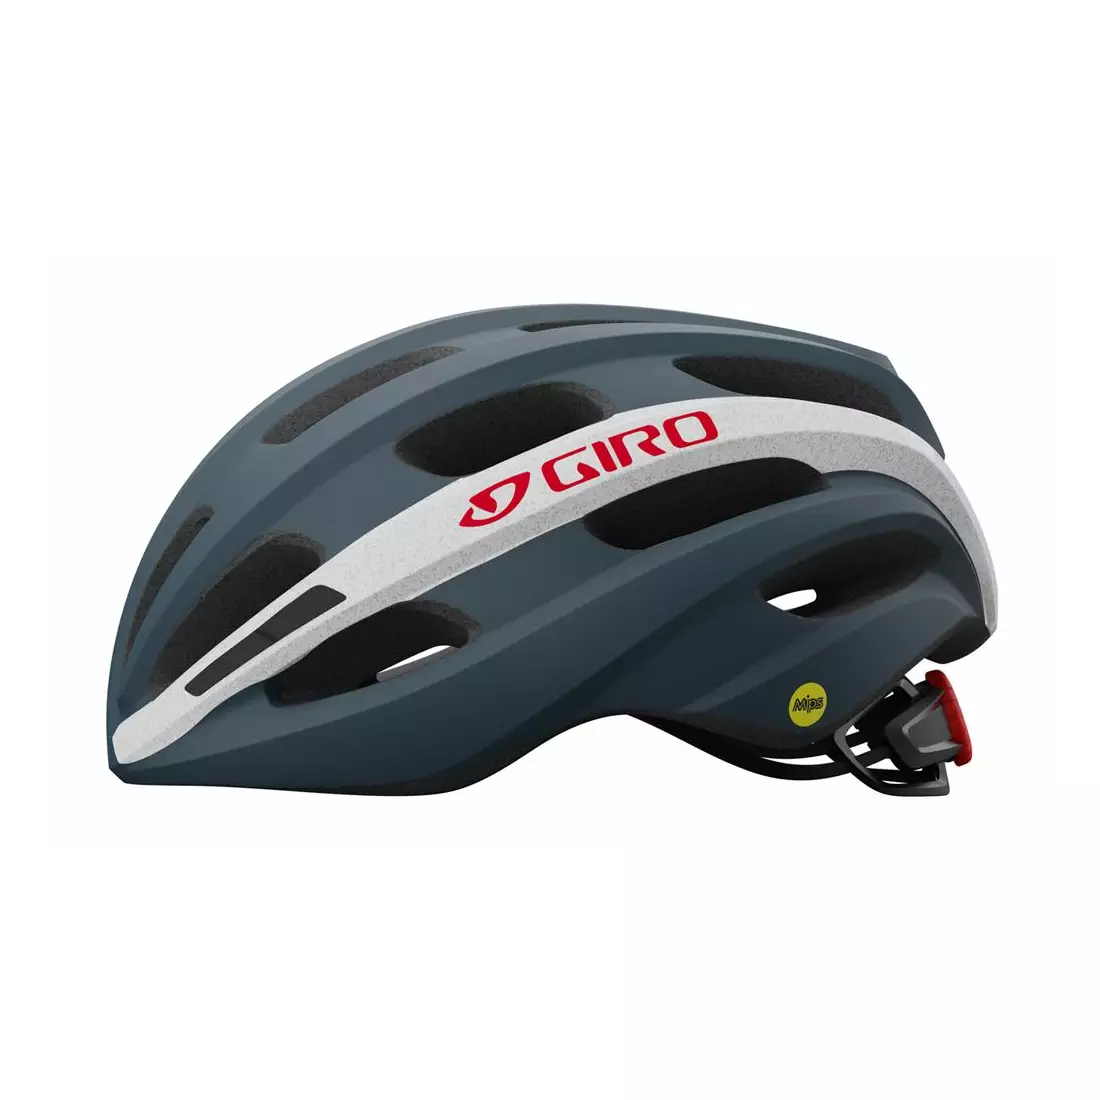 GIRO road bike helmet ISODE matte portaro grey white red GR-7129912